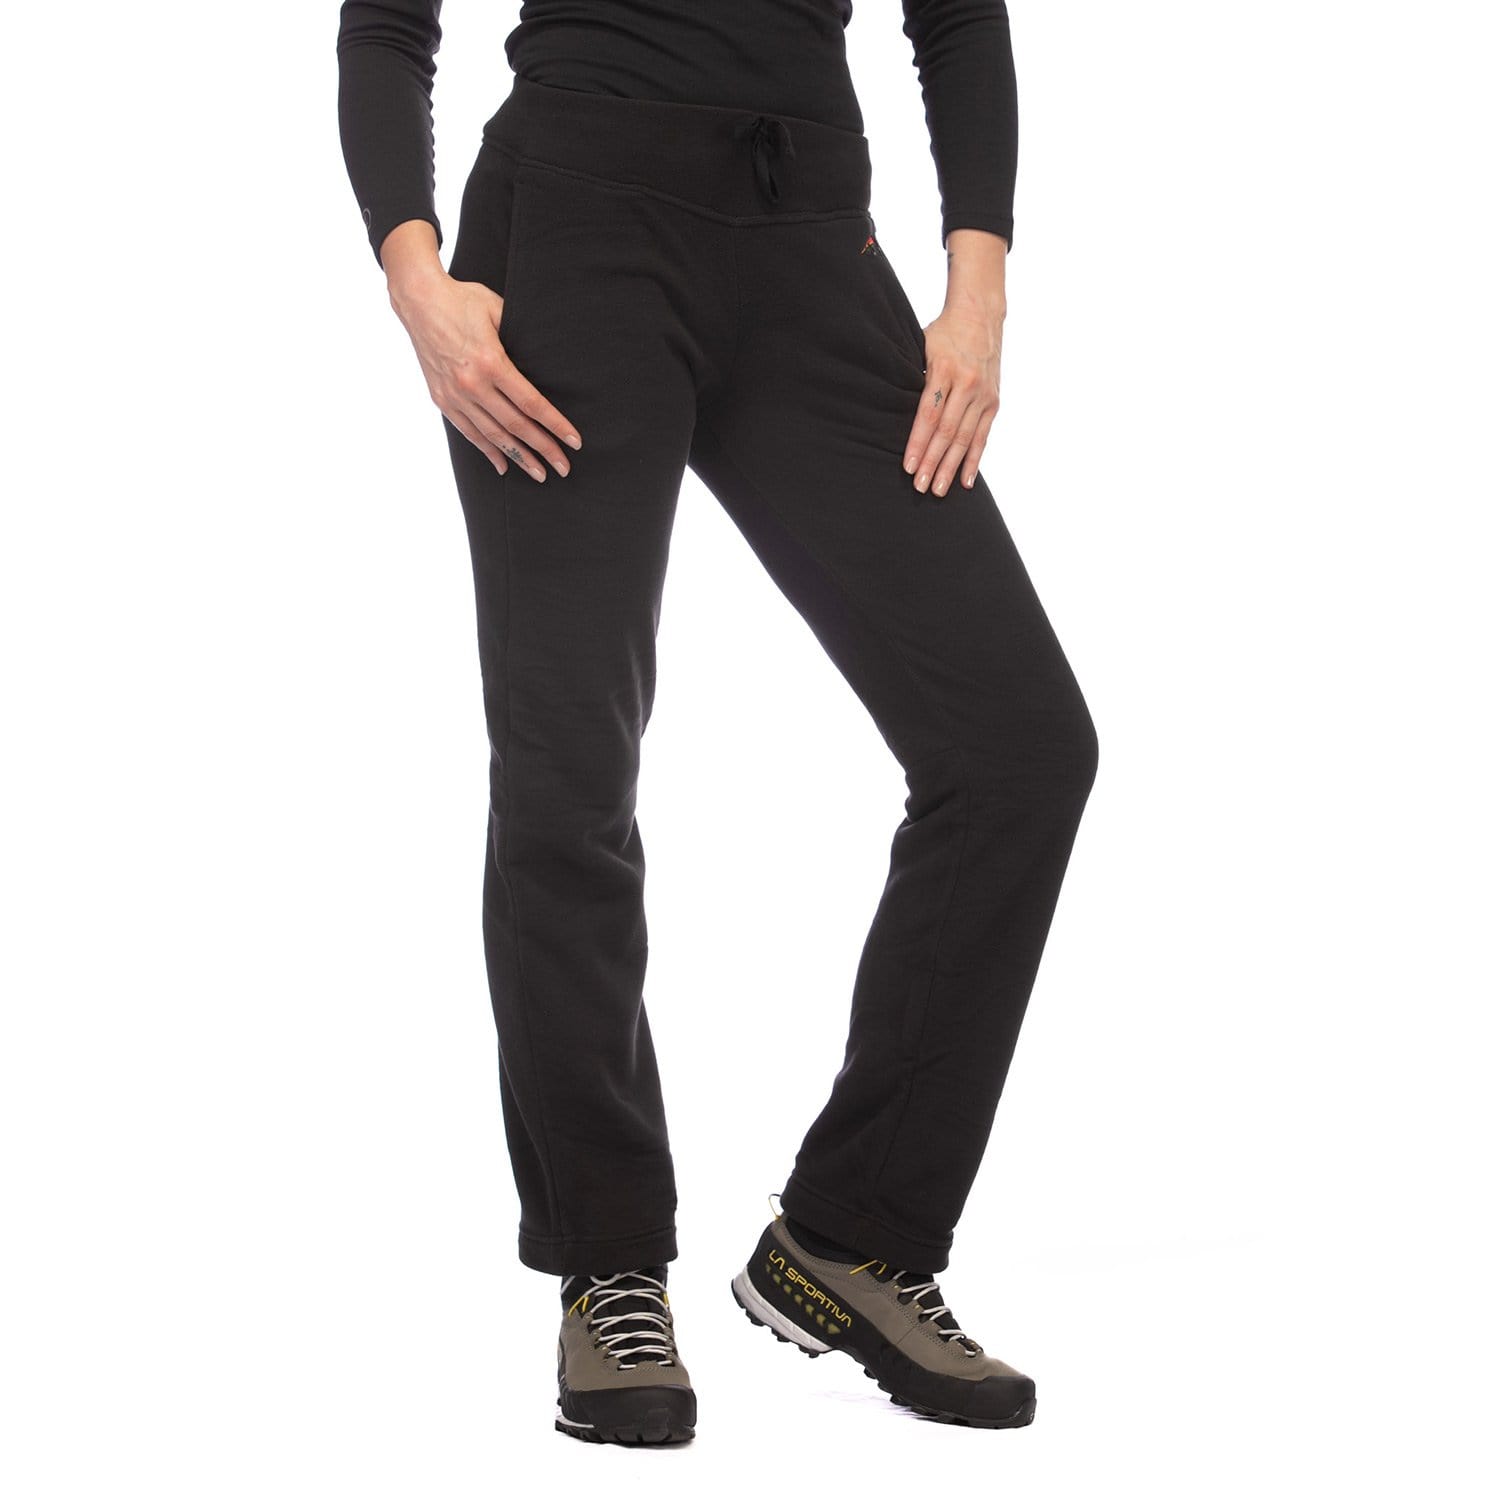 Women's Fleece Pants - Extra Comfy & Warm Fleece Pants for Women